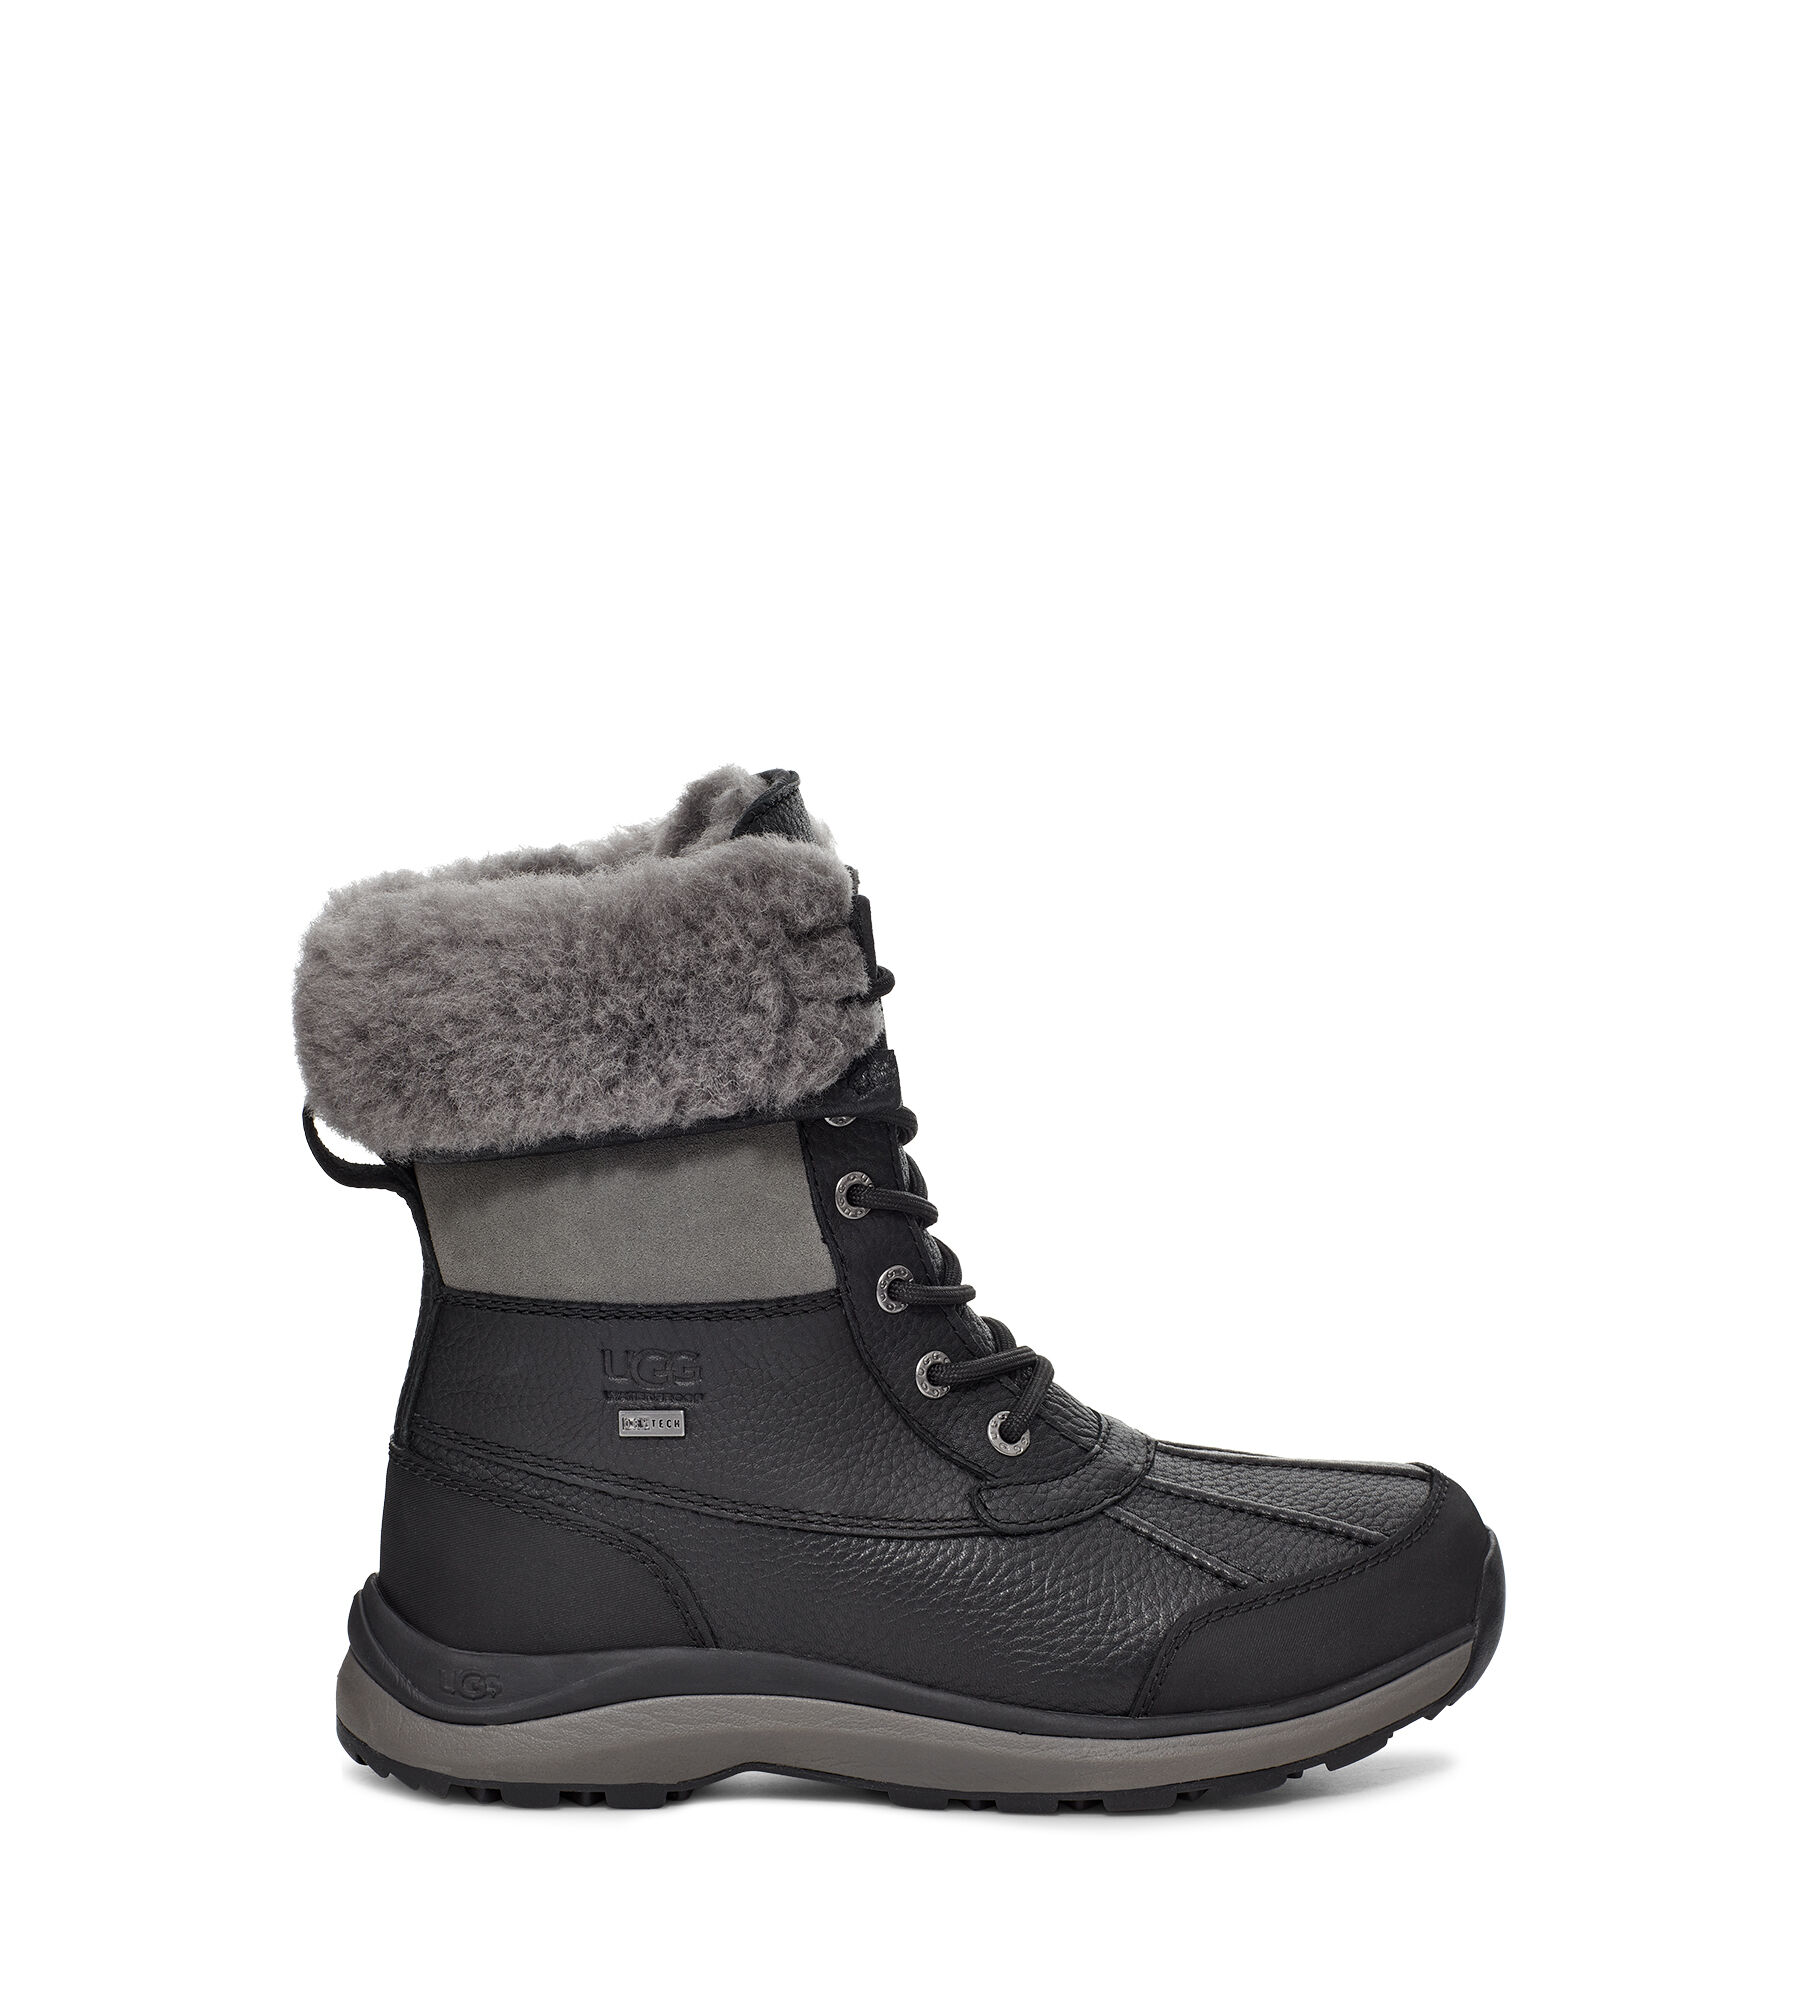 women's adirondack snow boots